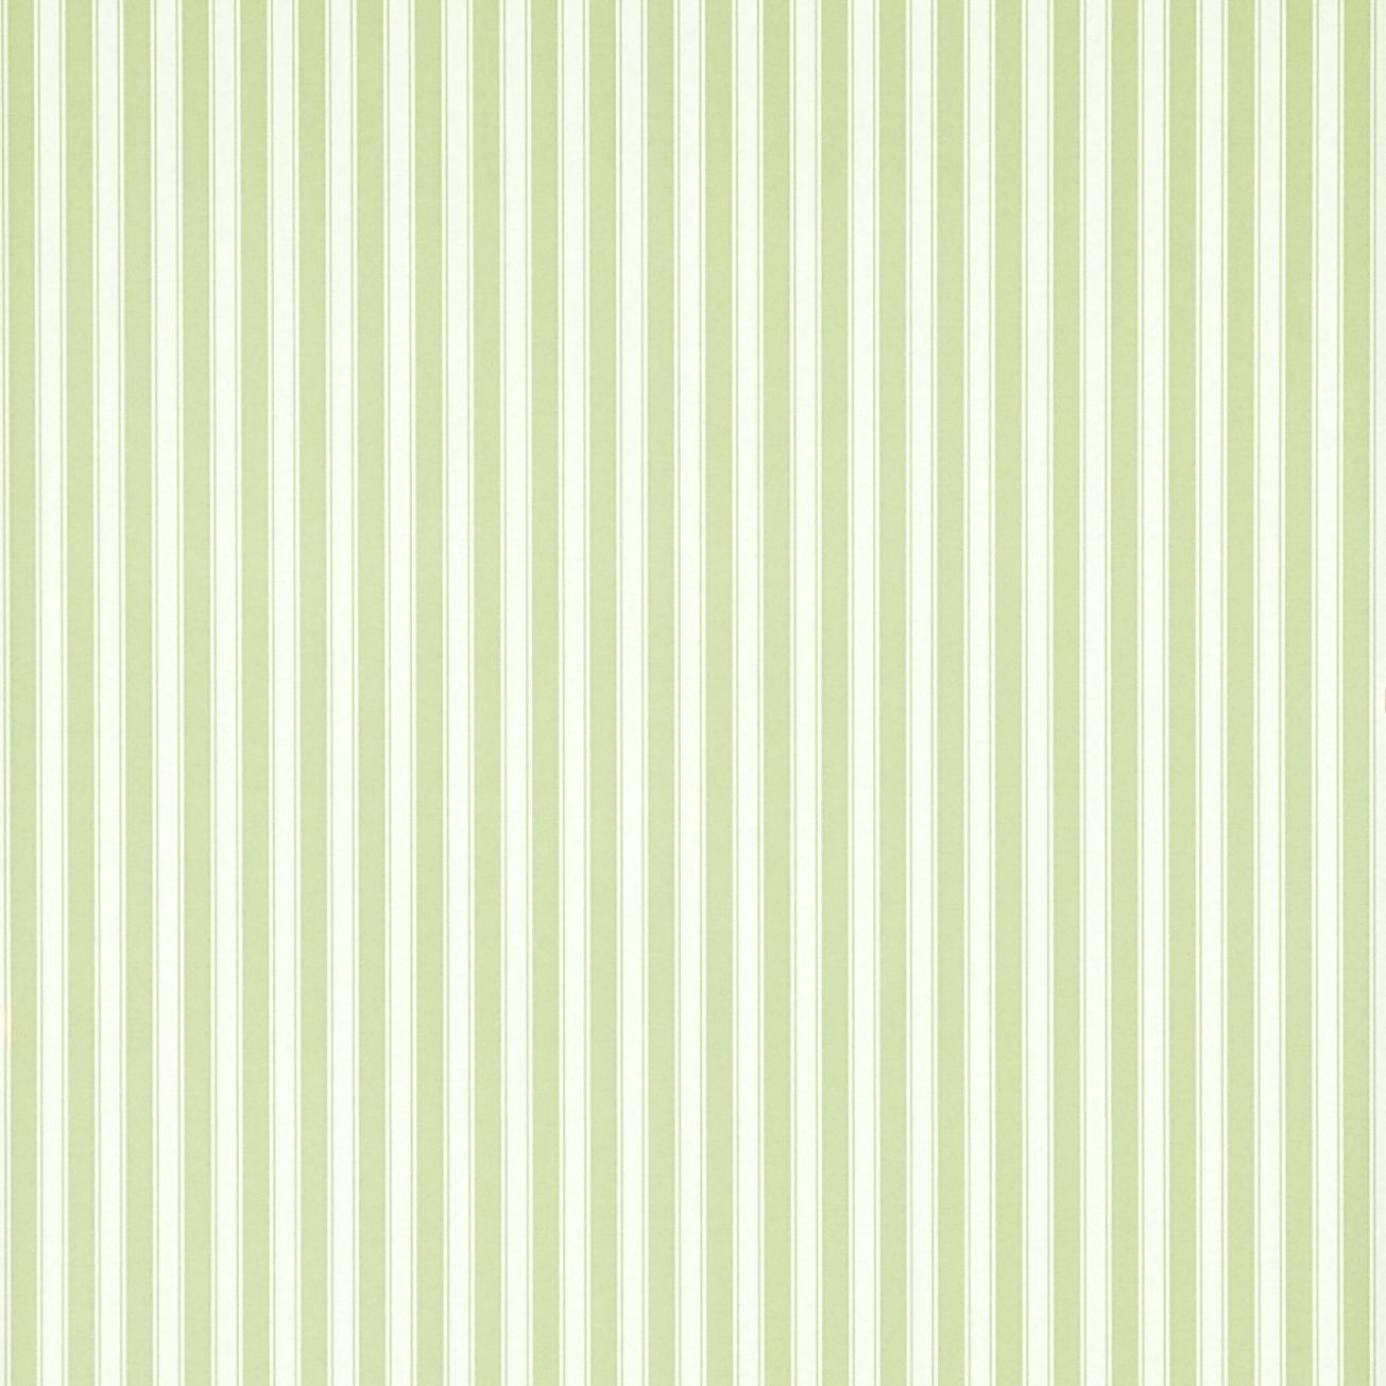 Pastel Green Striped Background